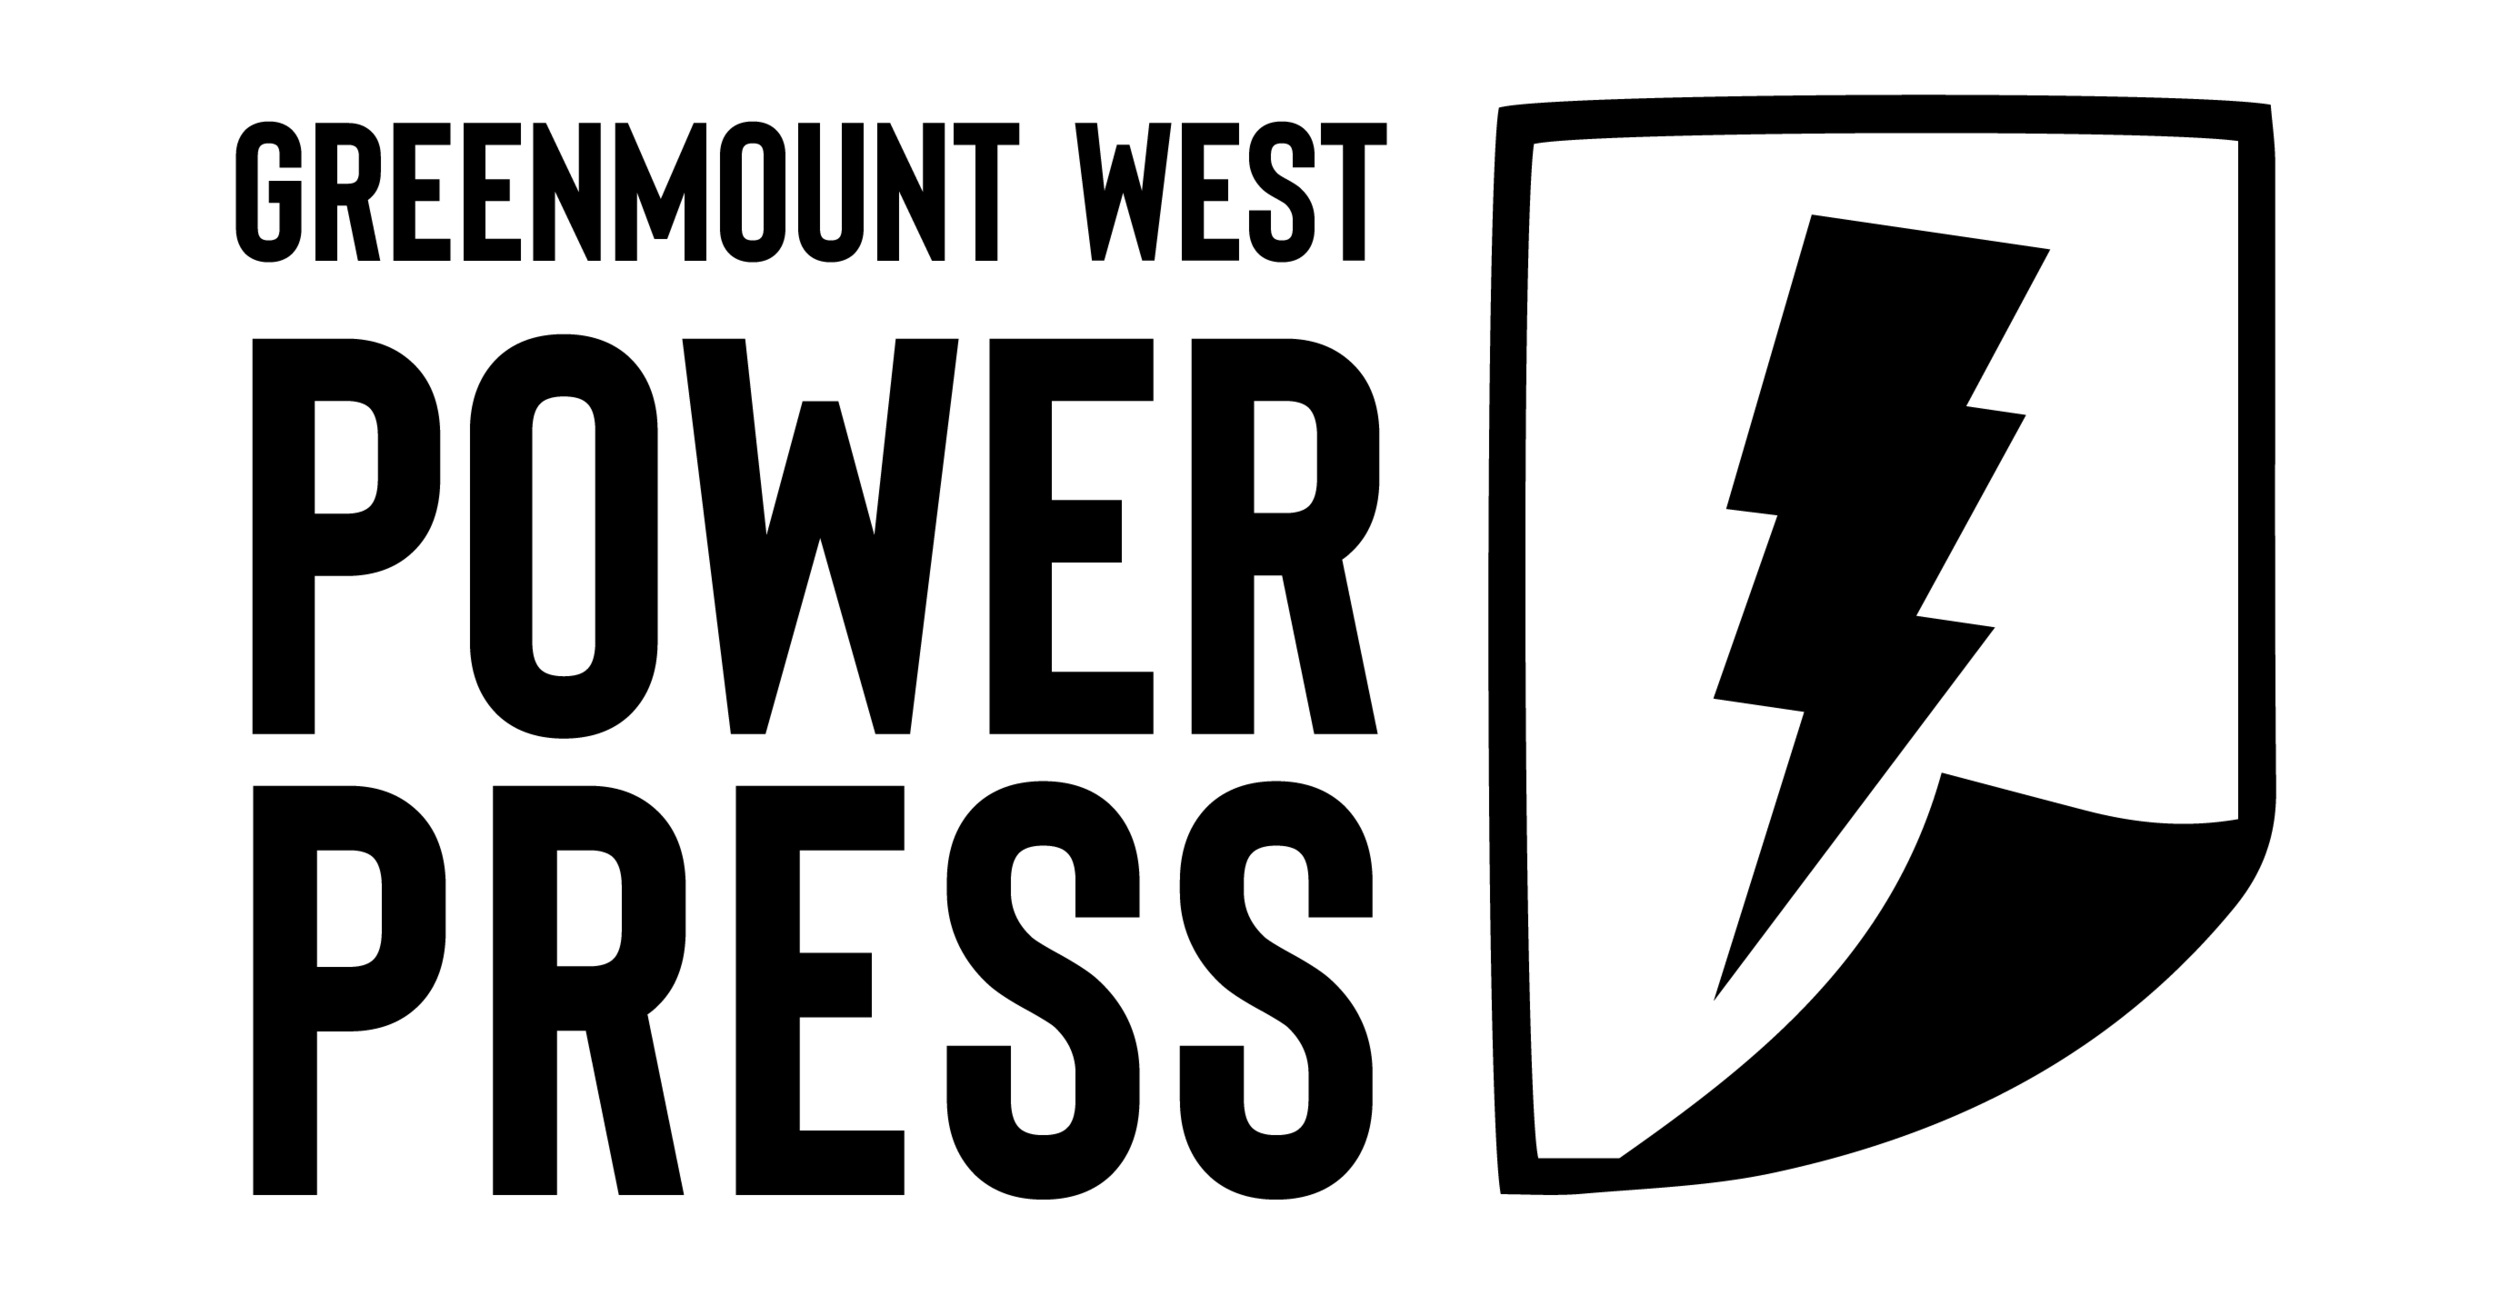 Greenmount West Power Press